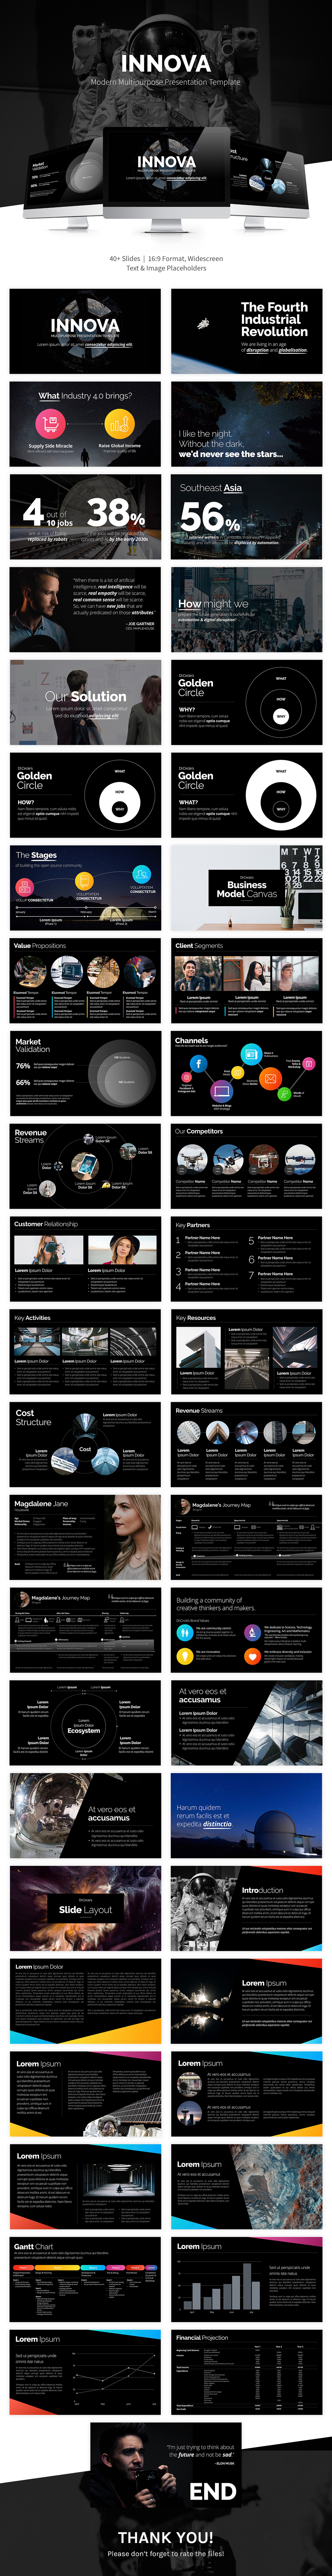 business presentation template company profile slide deck Startup pitch